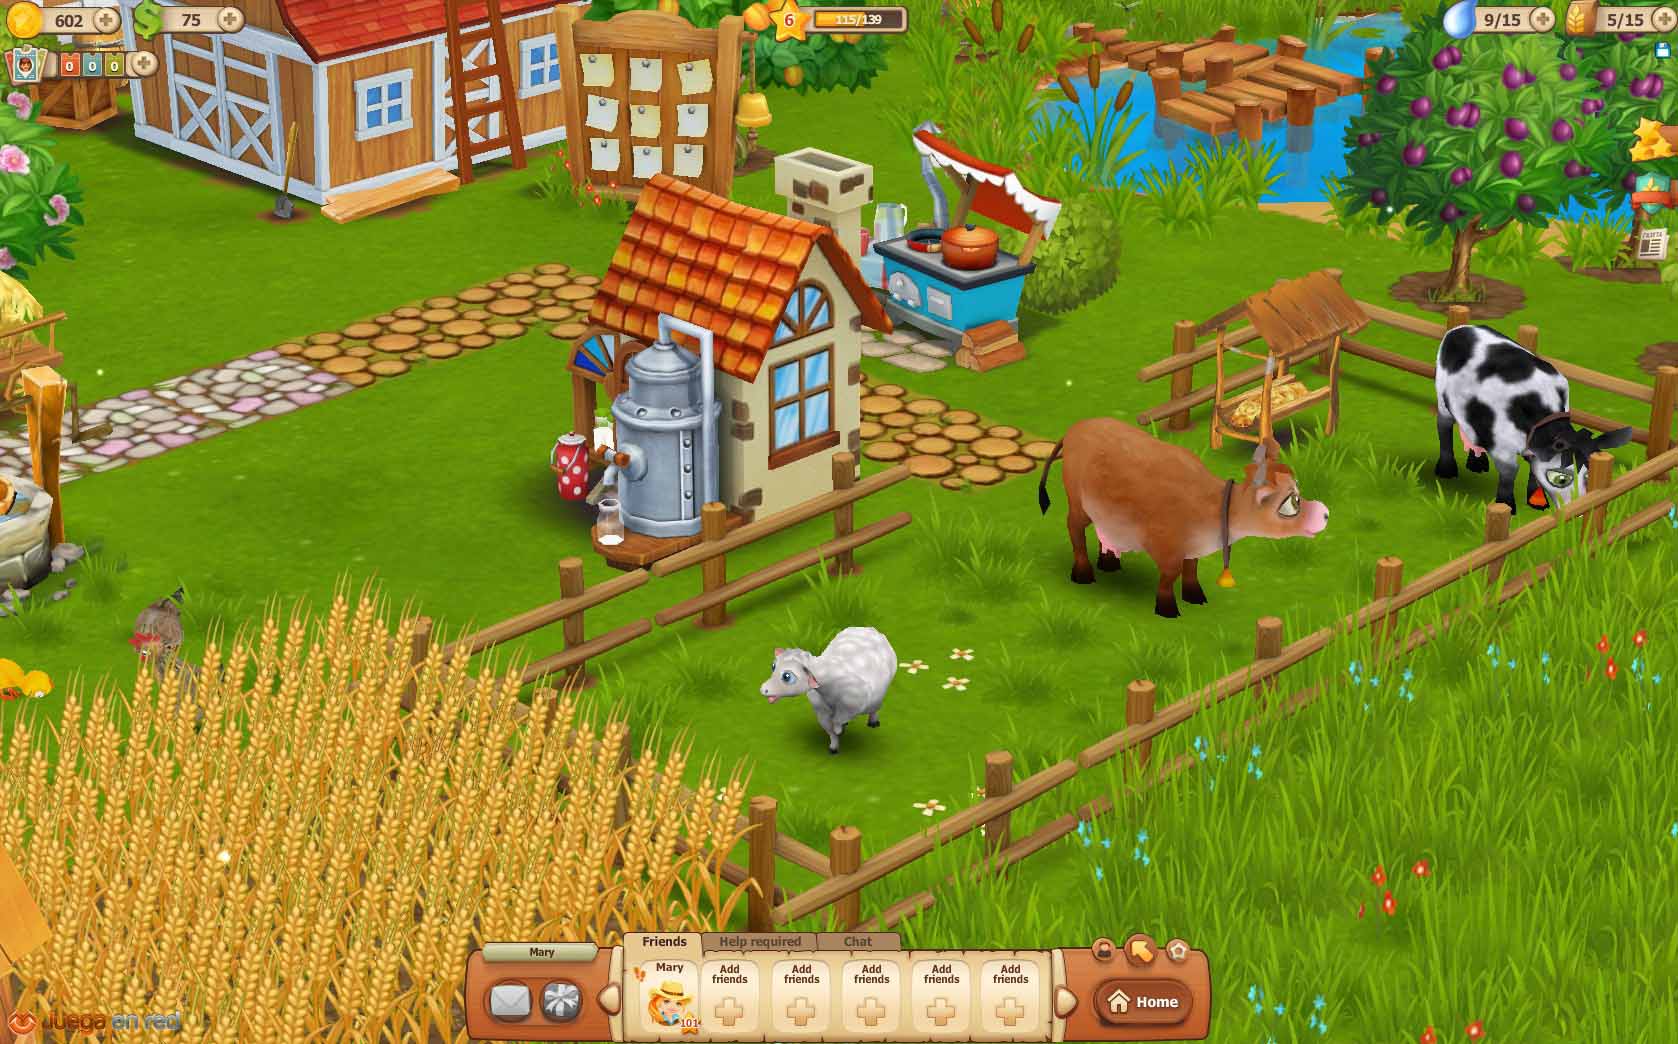 Игра логин ферма. Холидей игра ферма. Коровья ферма игра. Игра ферма 2000 года. Игра про корову на ферме.